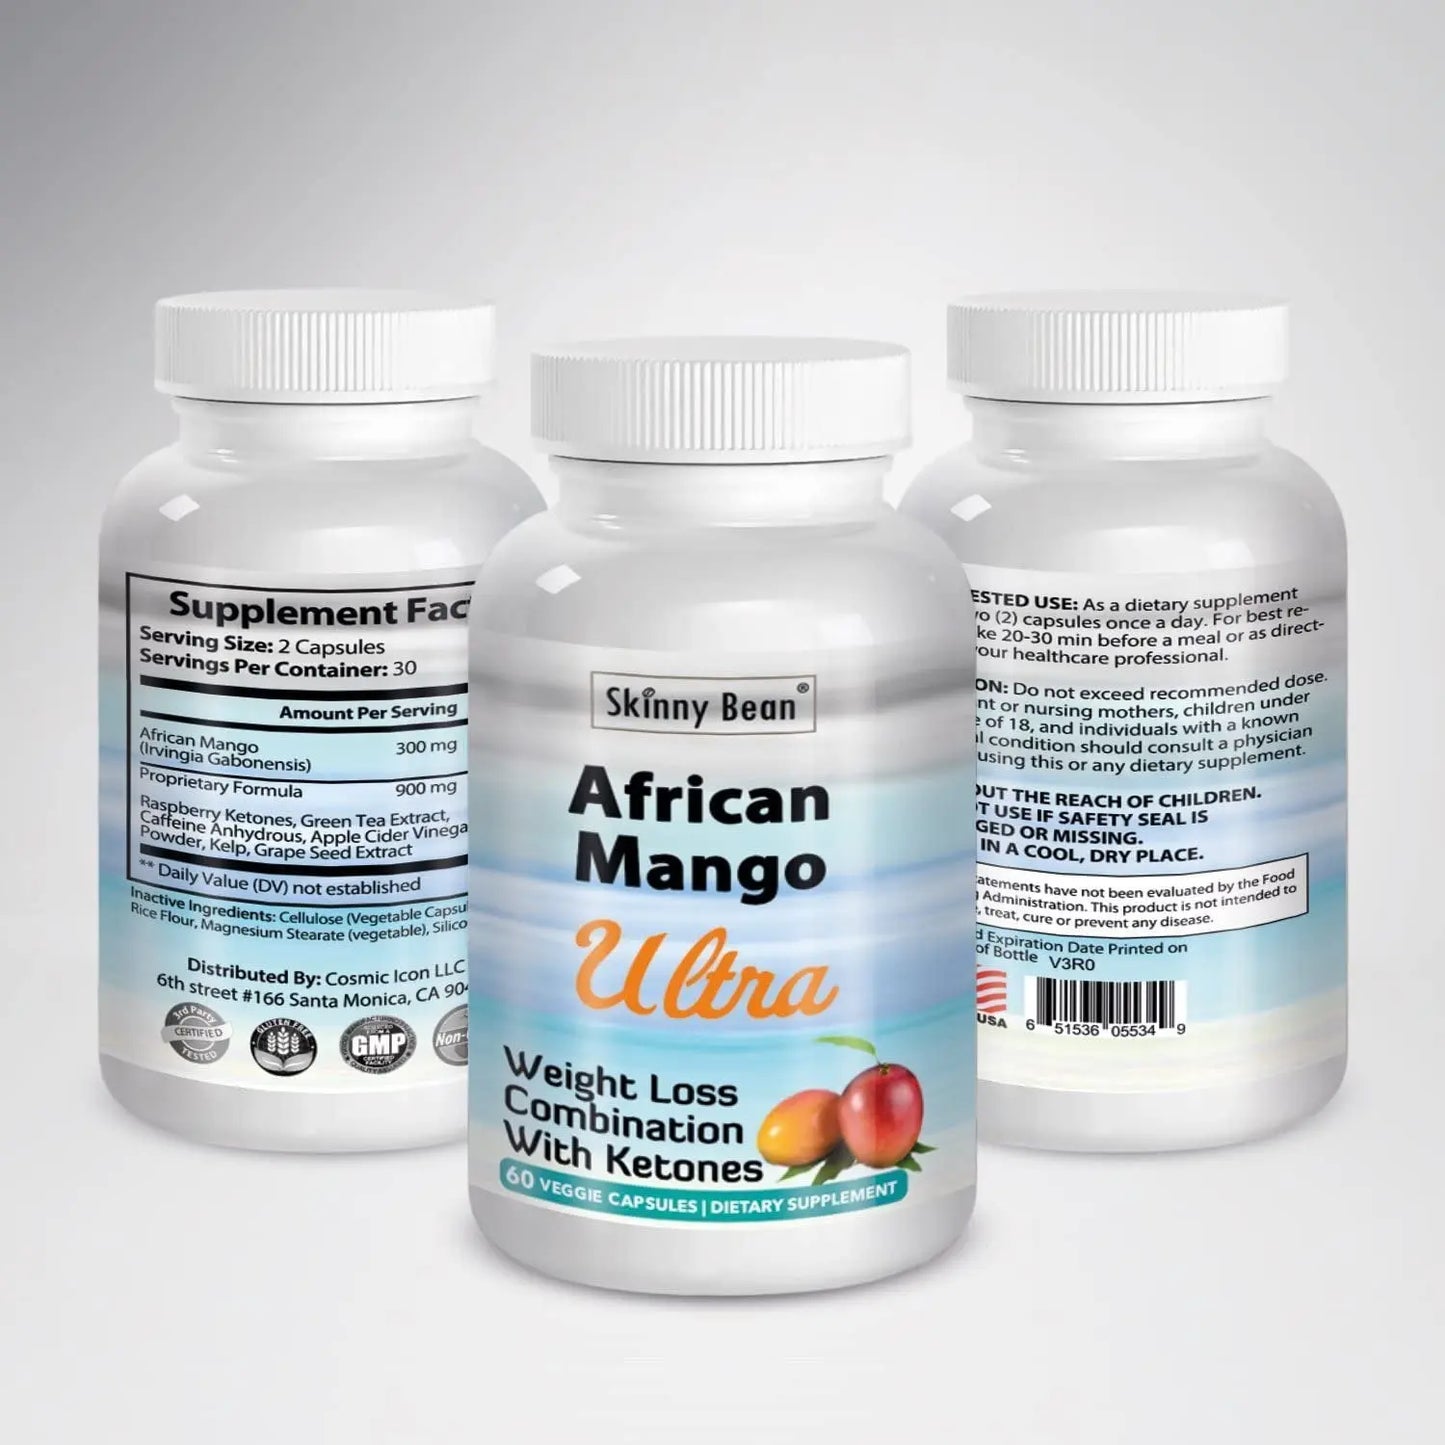 Skinny Bean® African Mango supplement keto stack Stack